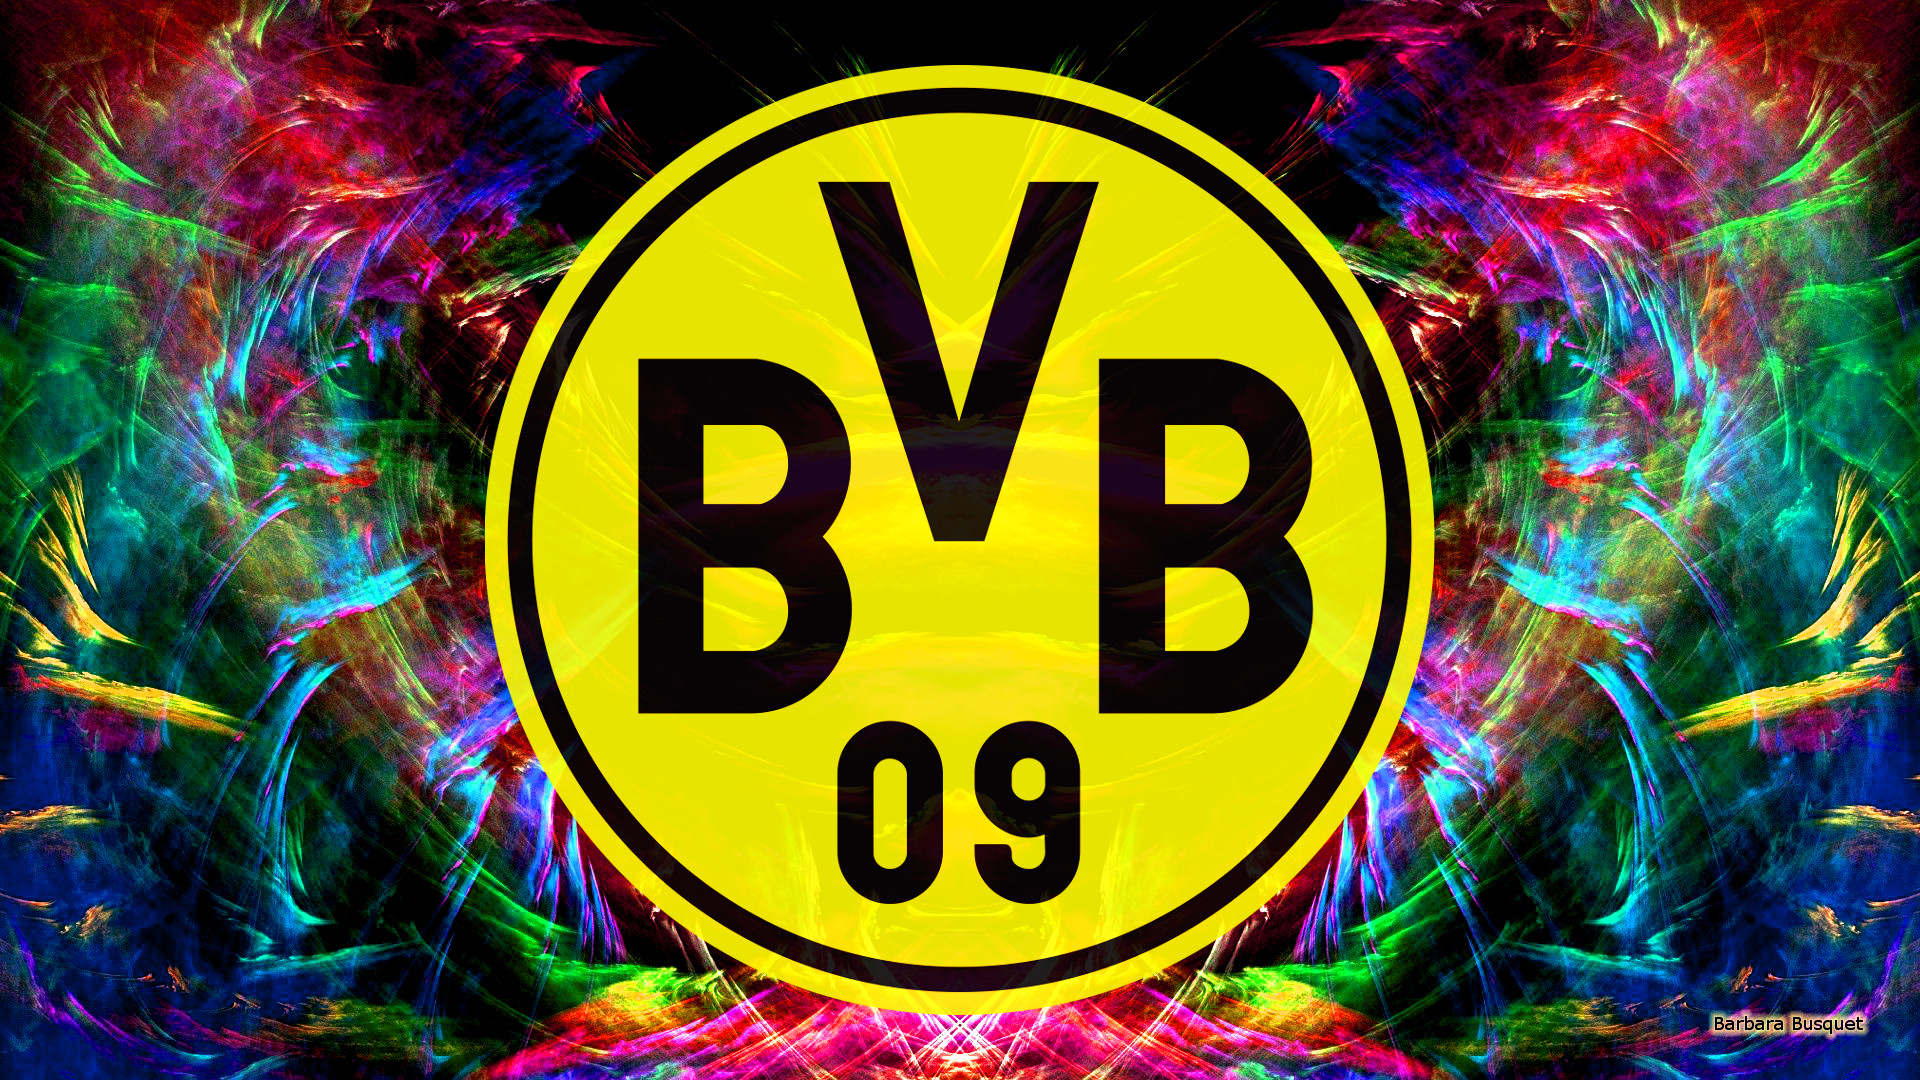 Bvb Borussia Dortmund Emblem Logo Soccer 1920x1080